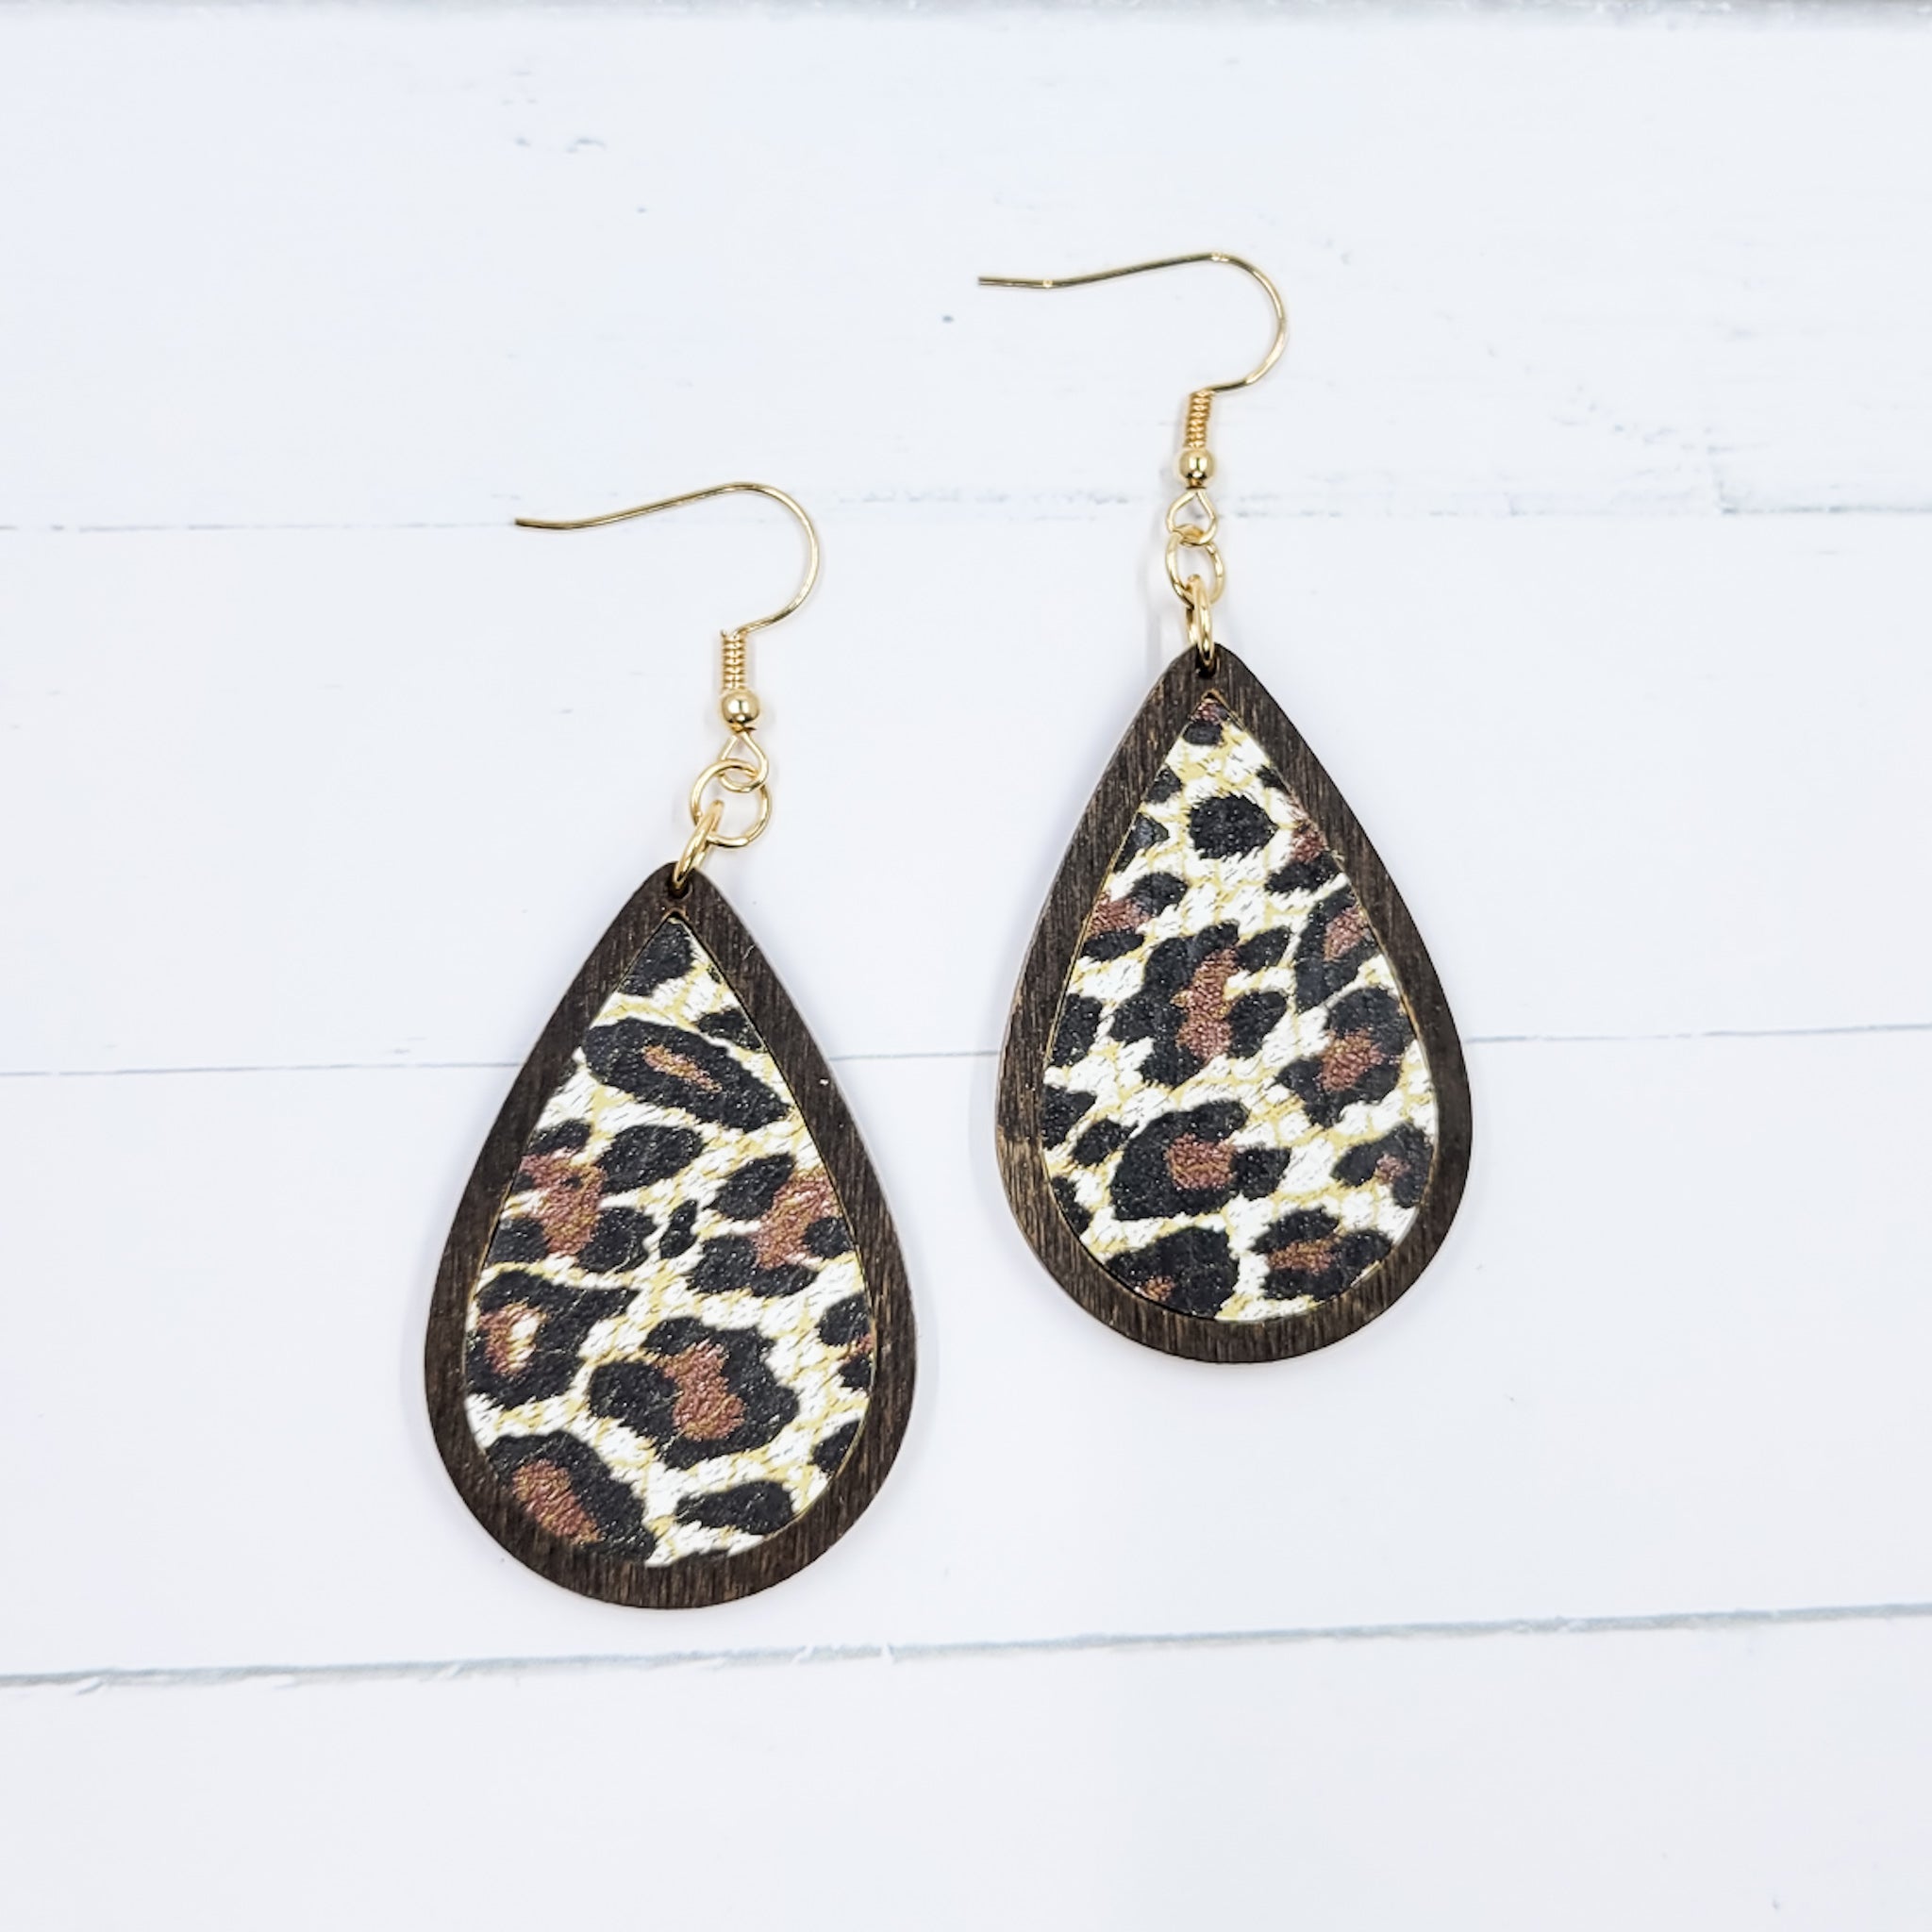 Wooden Teardrop - Chocolate Cheetah Leather Earrings